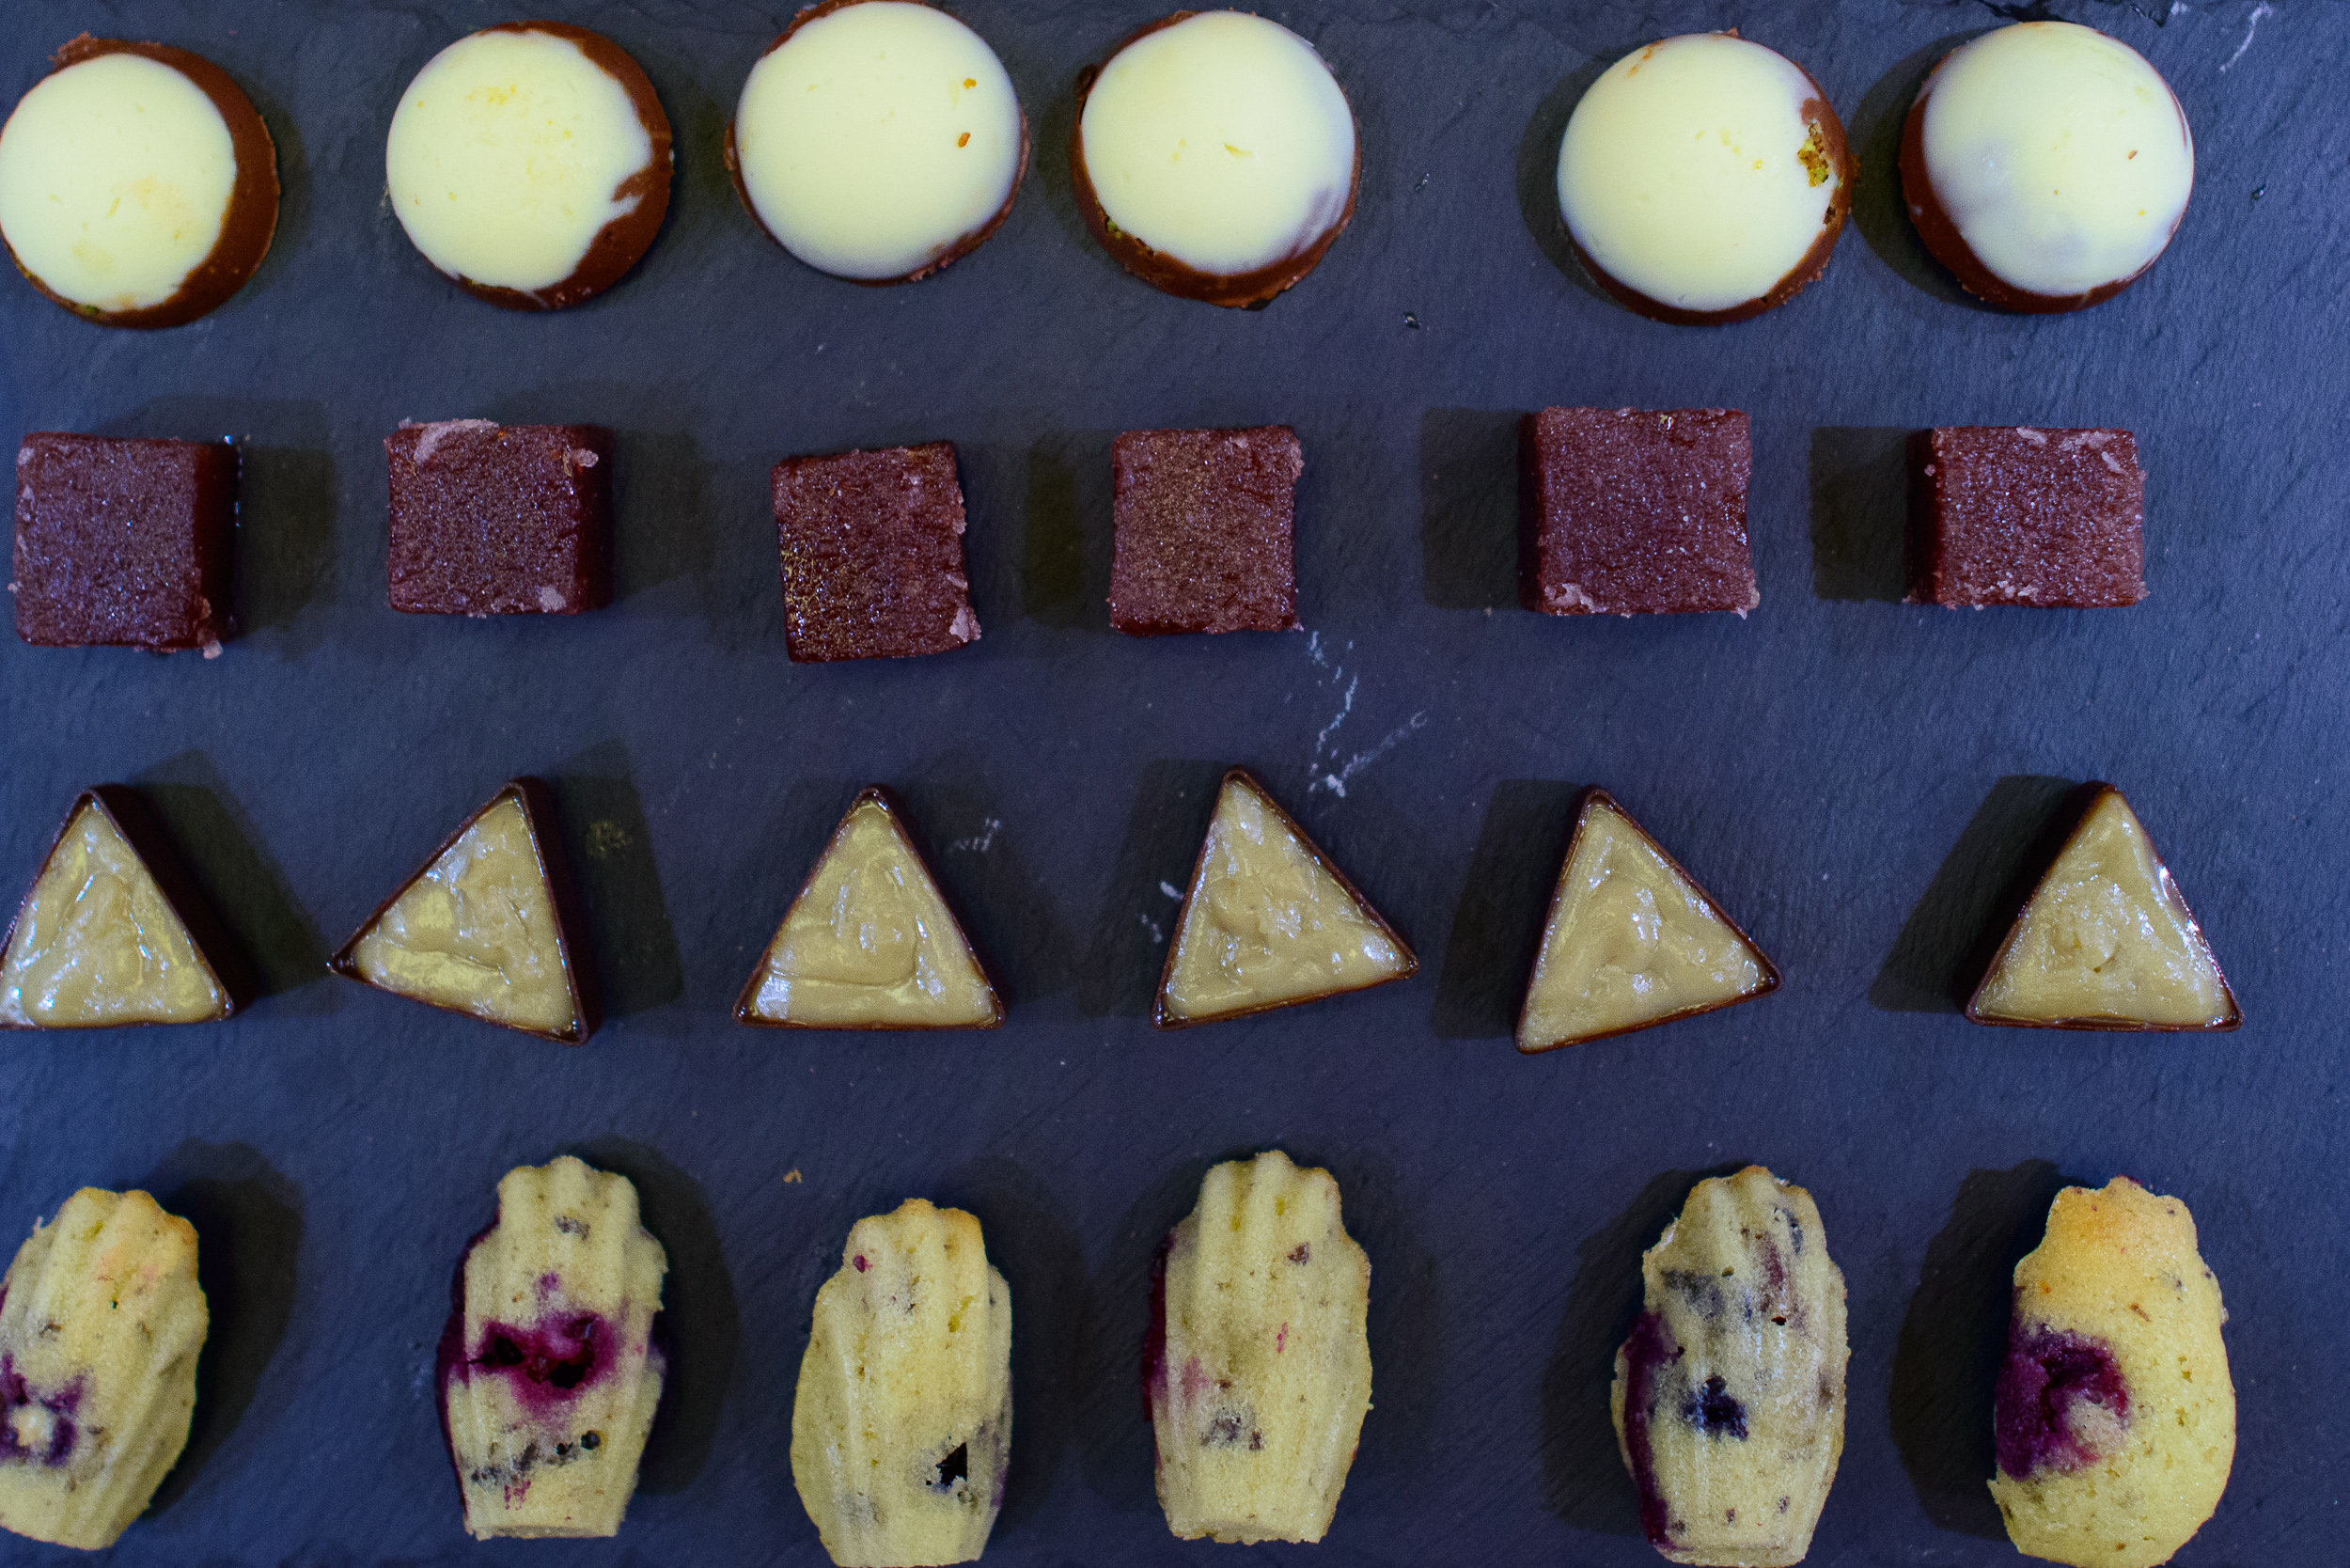 11th Course: Blueberry financier, sweet potato and banana truffl